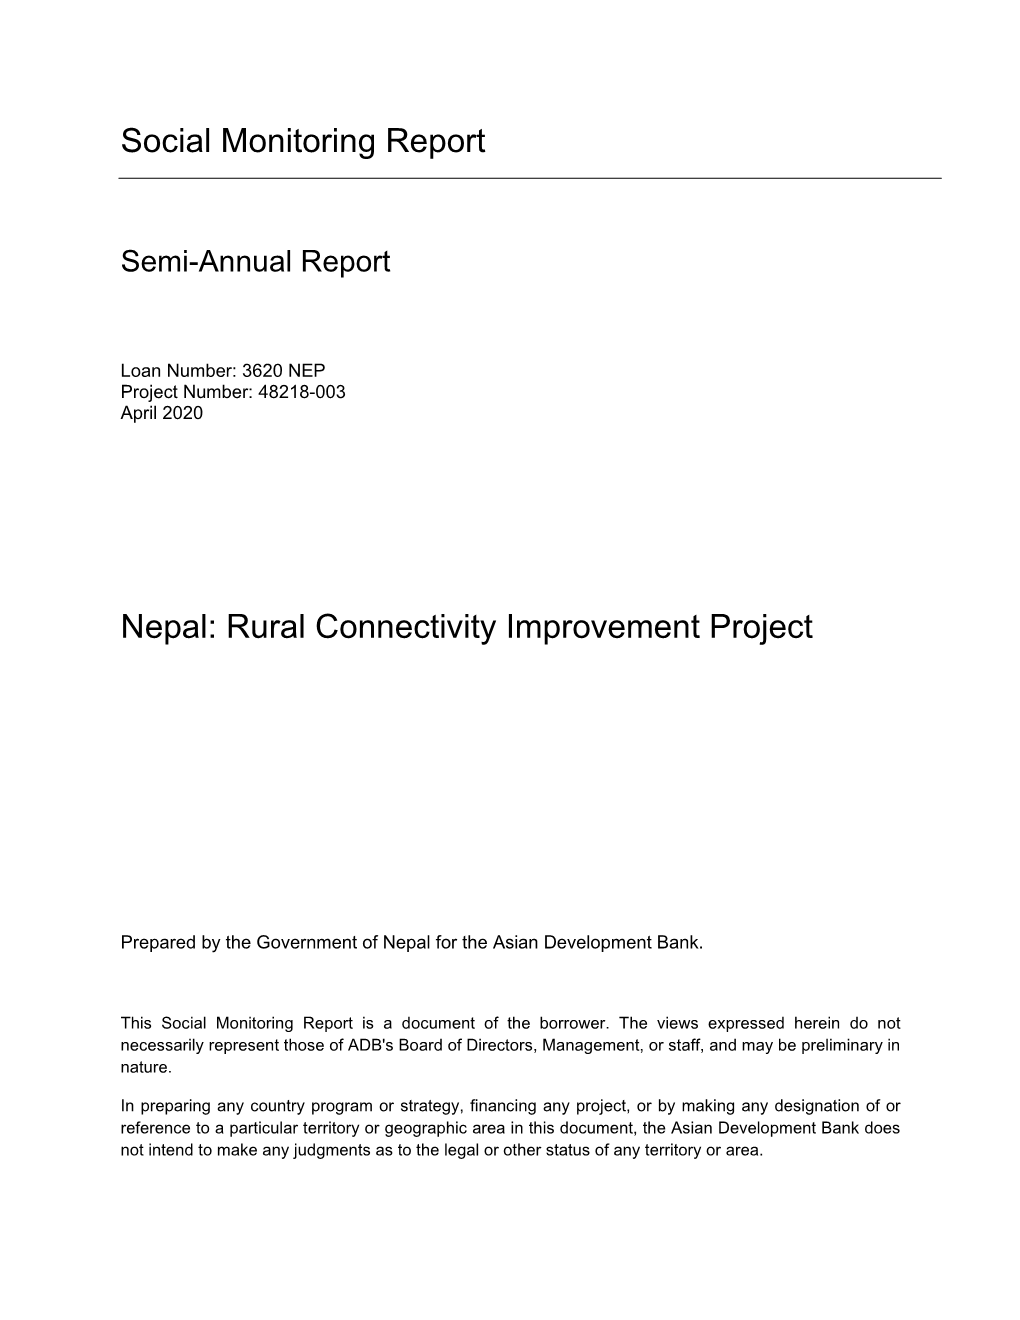 48218-003: Rural Connectivity Improvement Project